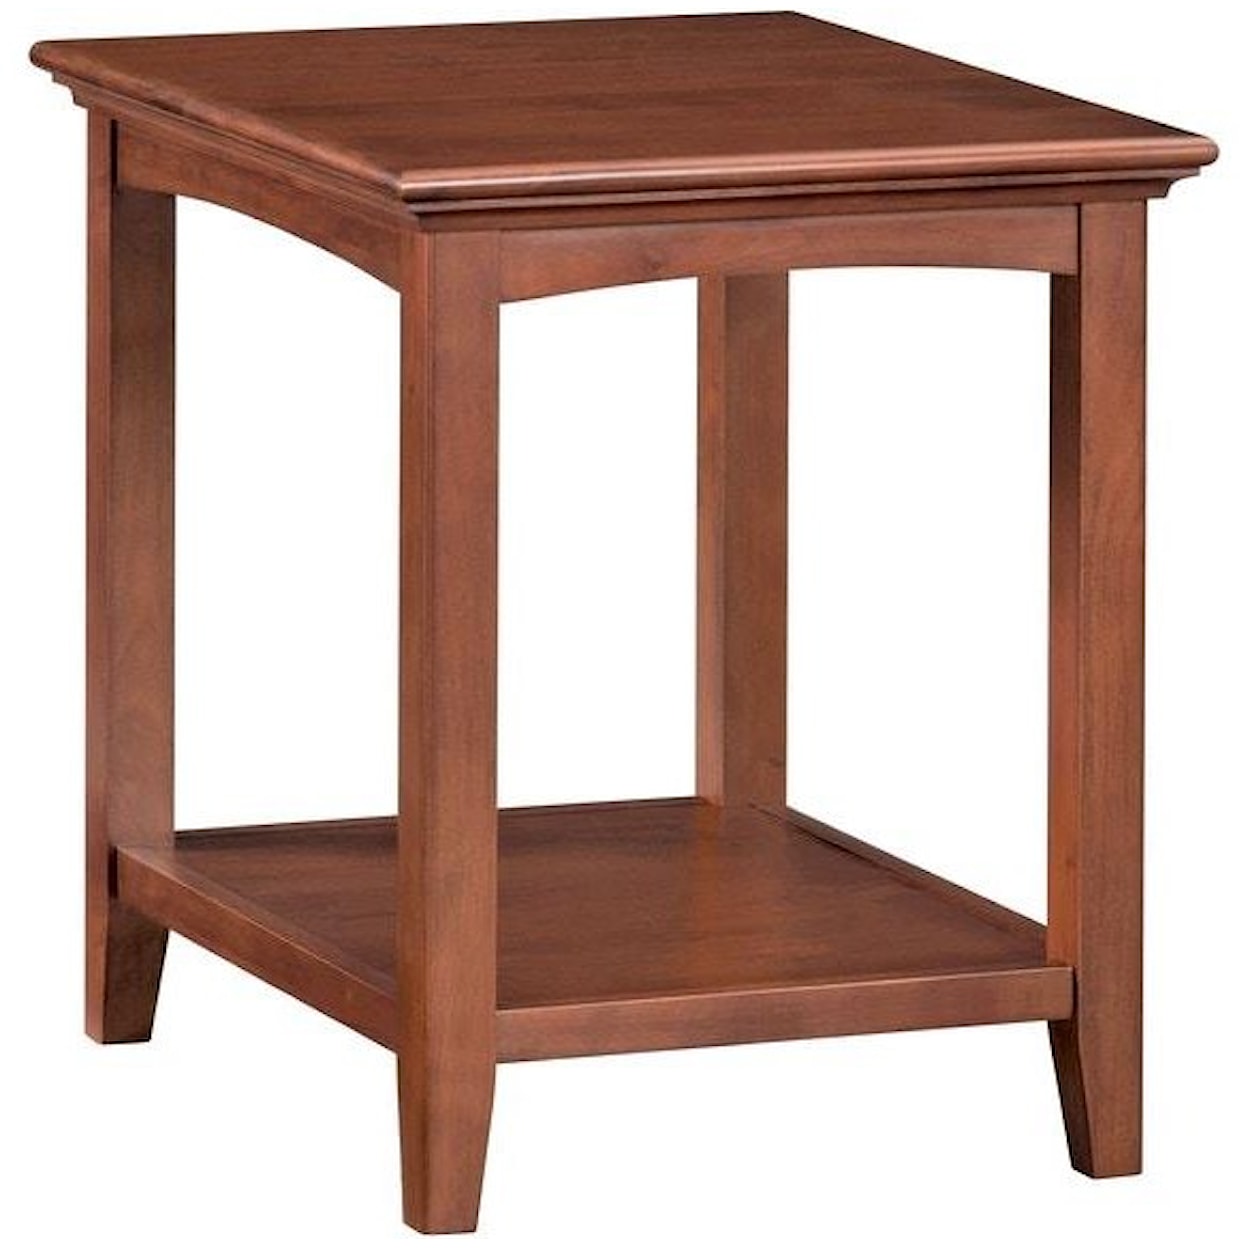 Whittier Wood McKenzie Glazed Cherry Rectangular Side Table